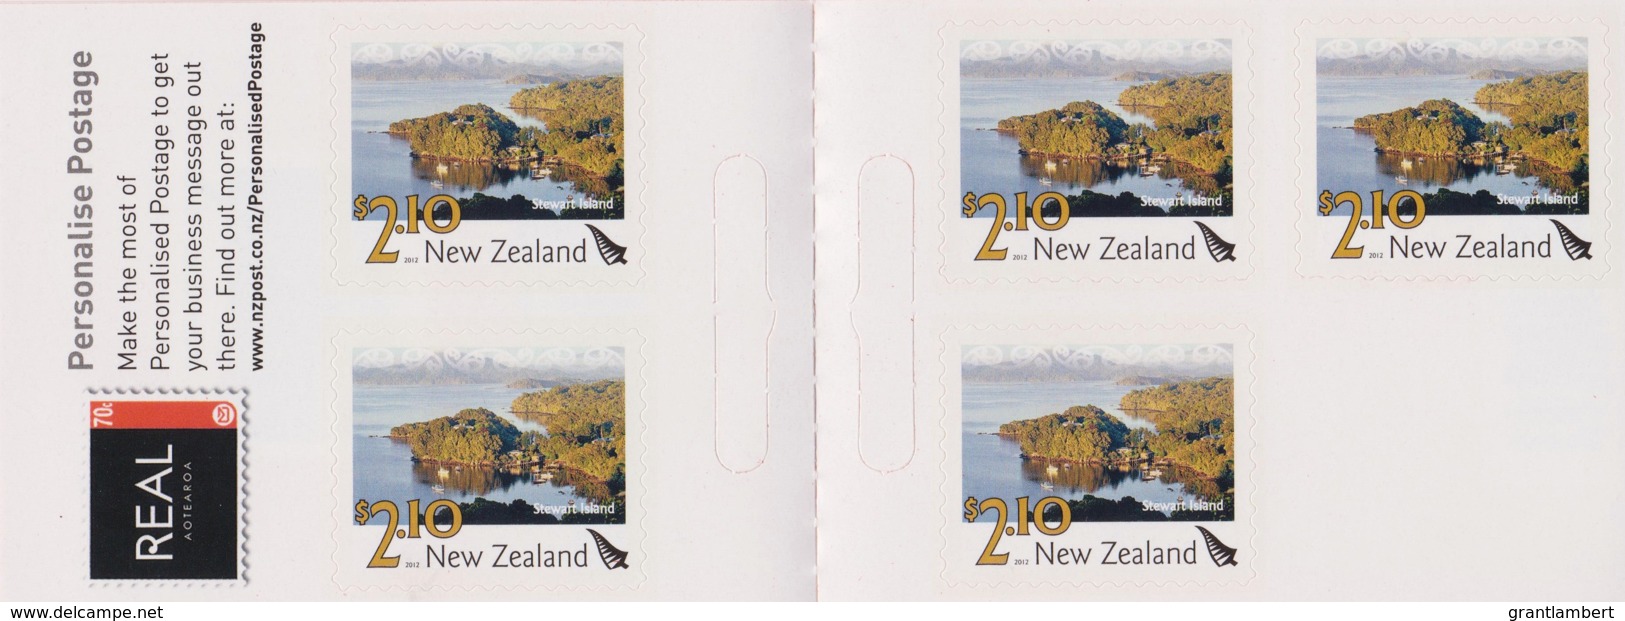 New Zealand 2012 Scenic $2.10 Stewart Island Mint Booklet - Carnets